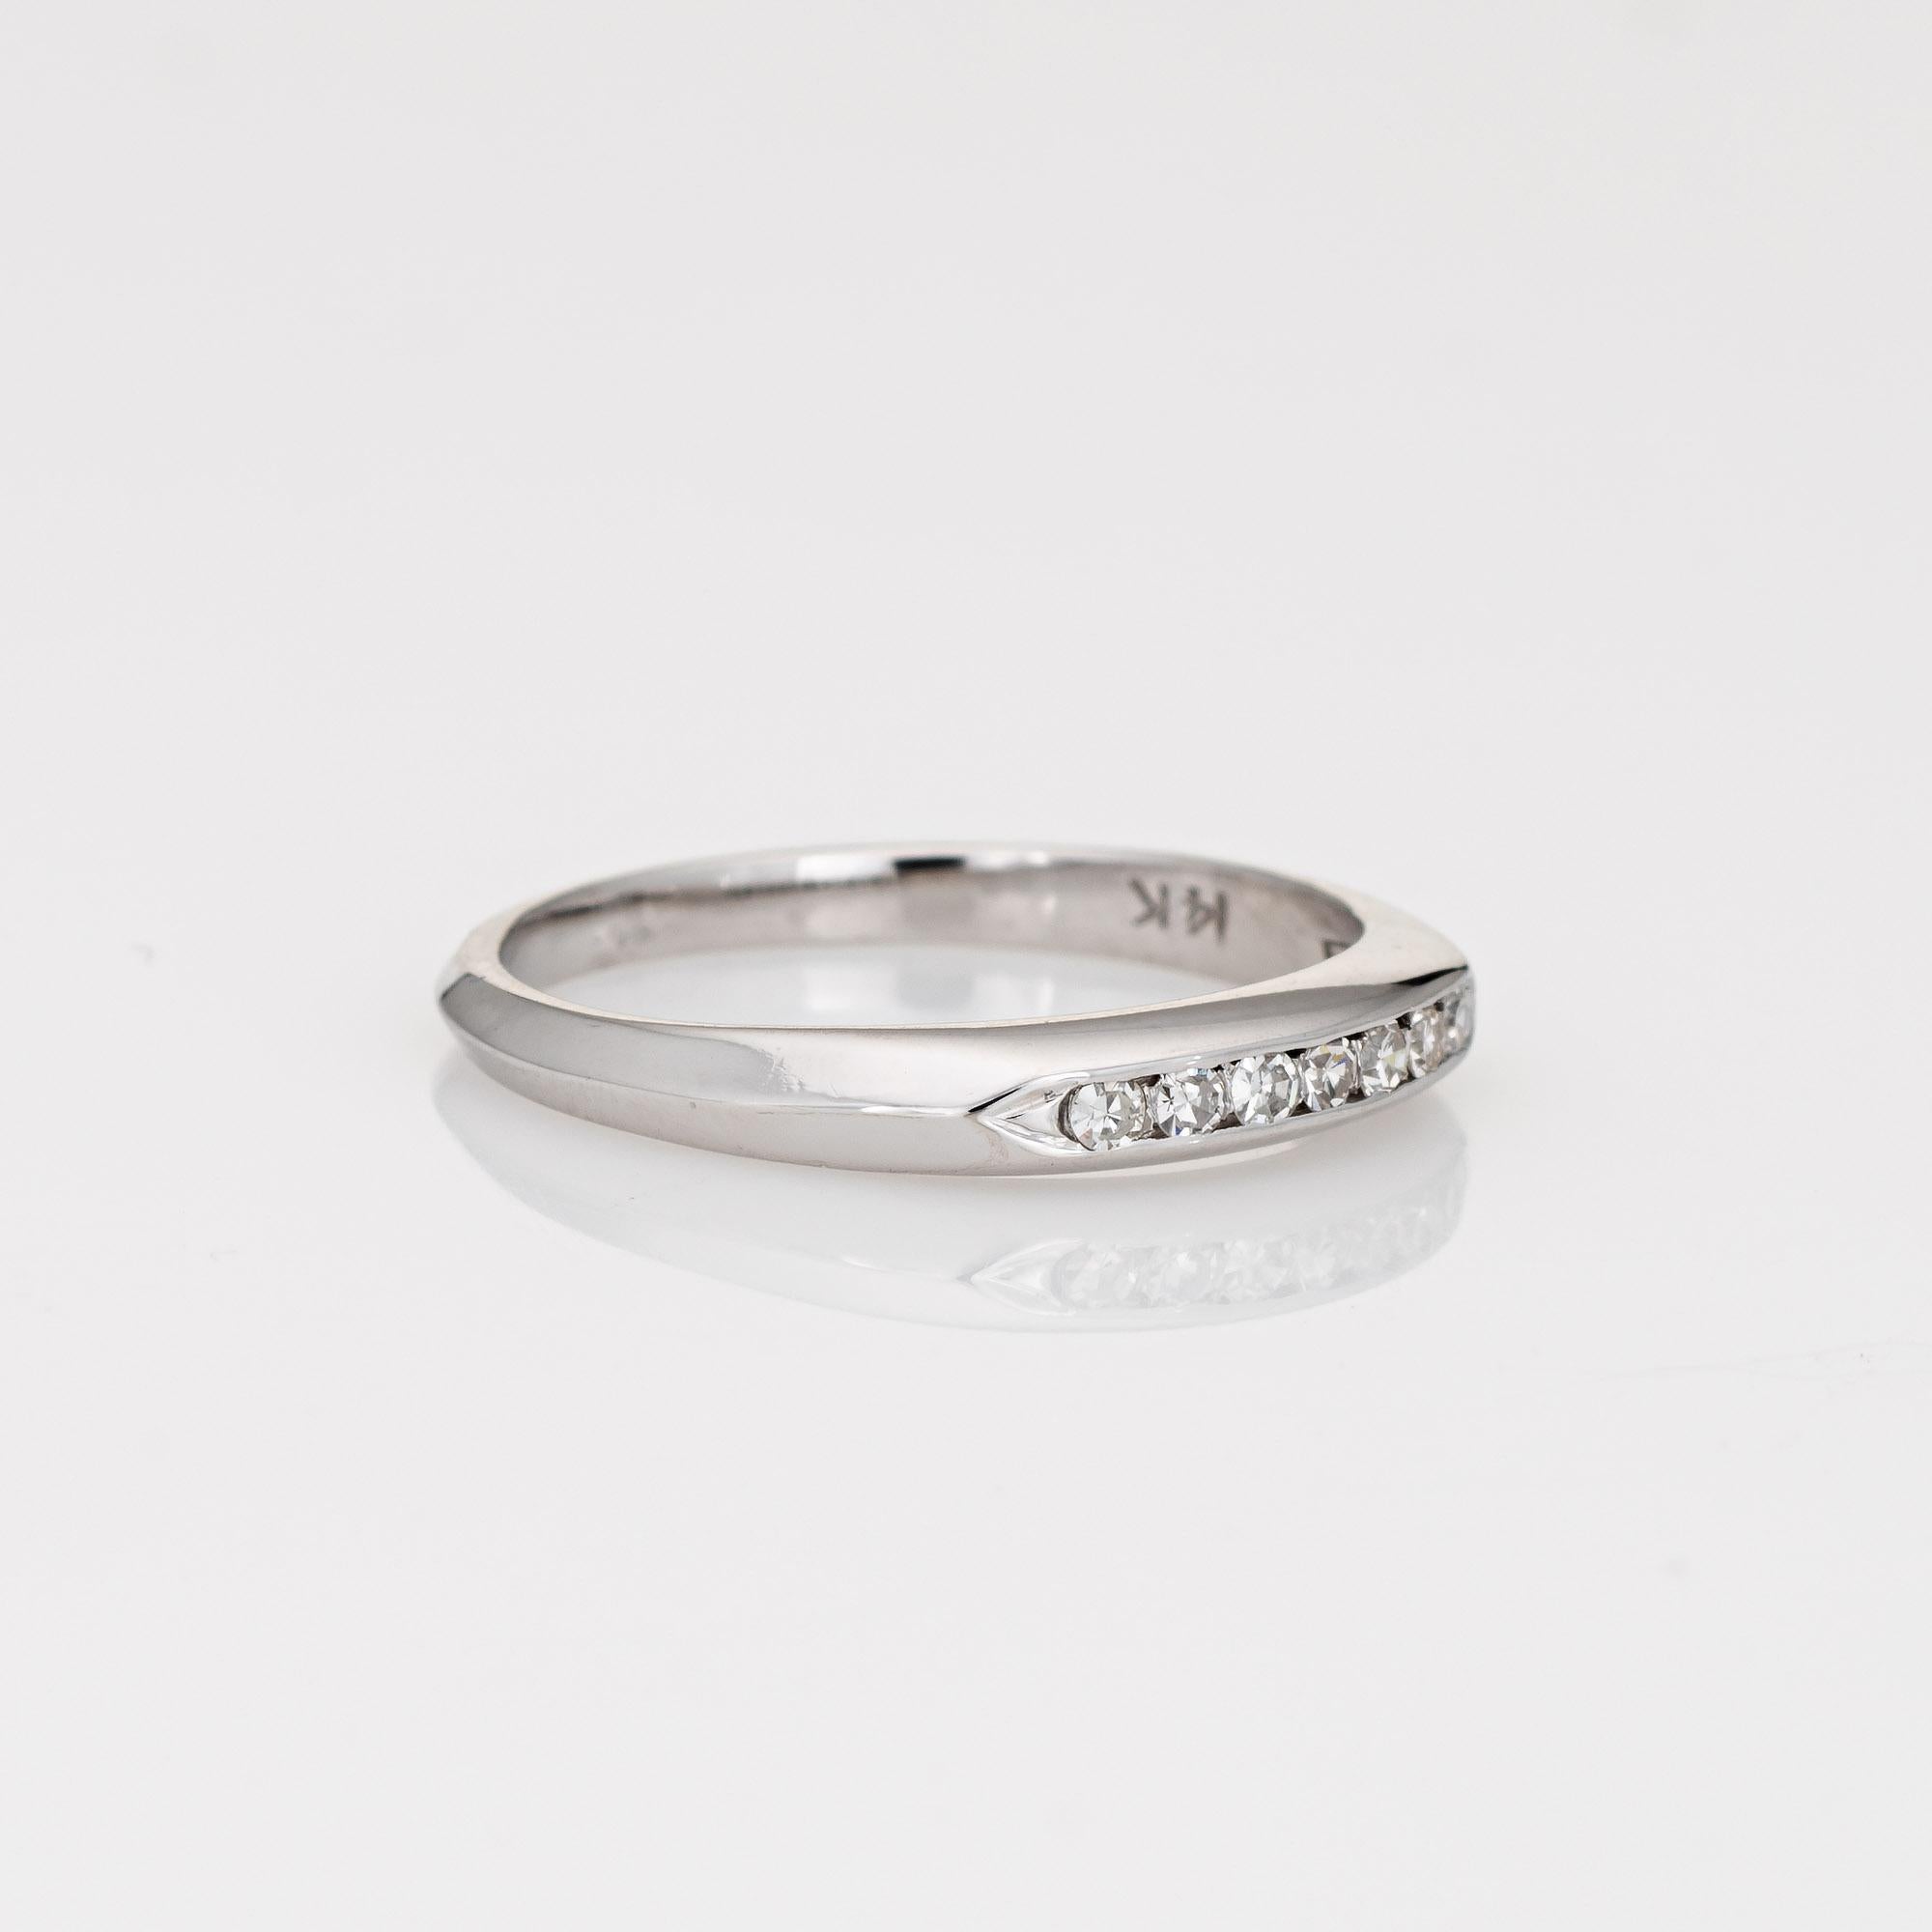 Round Cut Vintage Art Deco Diamond Ring 14 Karat White Gold Wedding Band Fine Jewelry